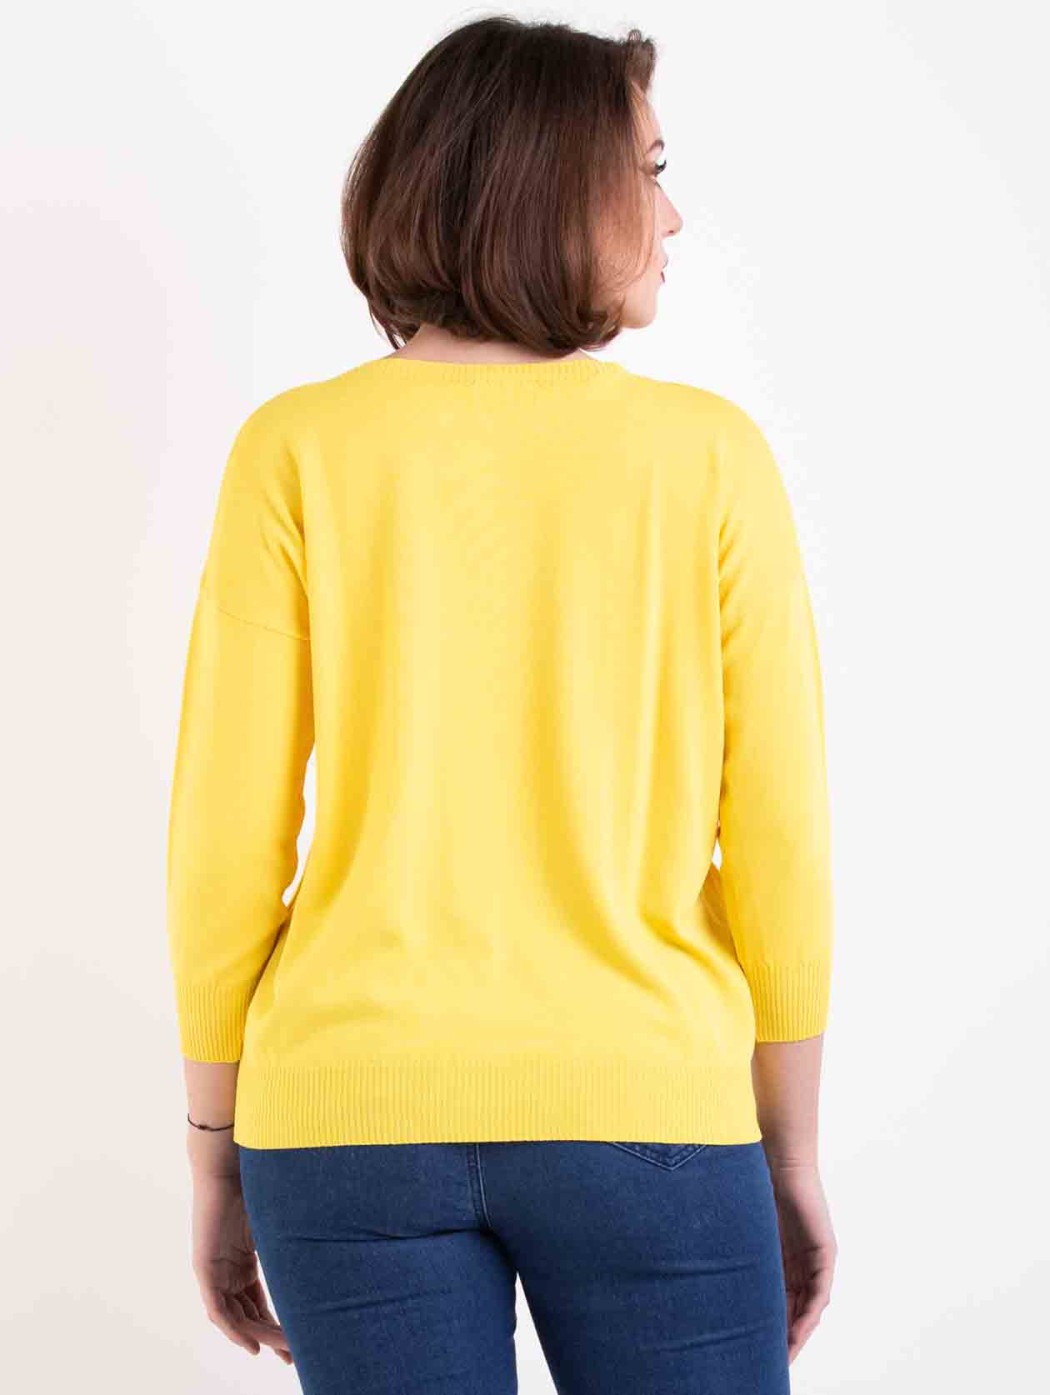 https://www.taglieconformate.com/shop/13768-home_default/yellow-pullover-cotton-sweater.jpg